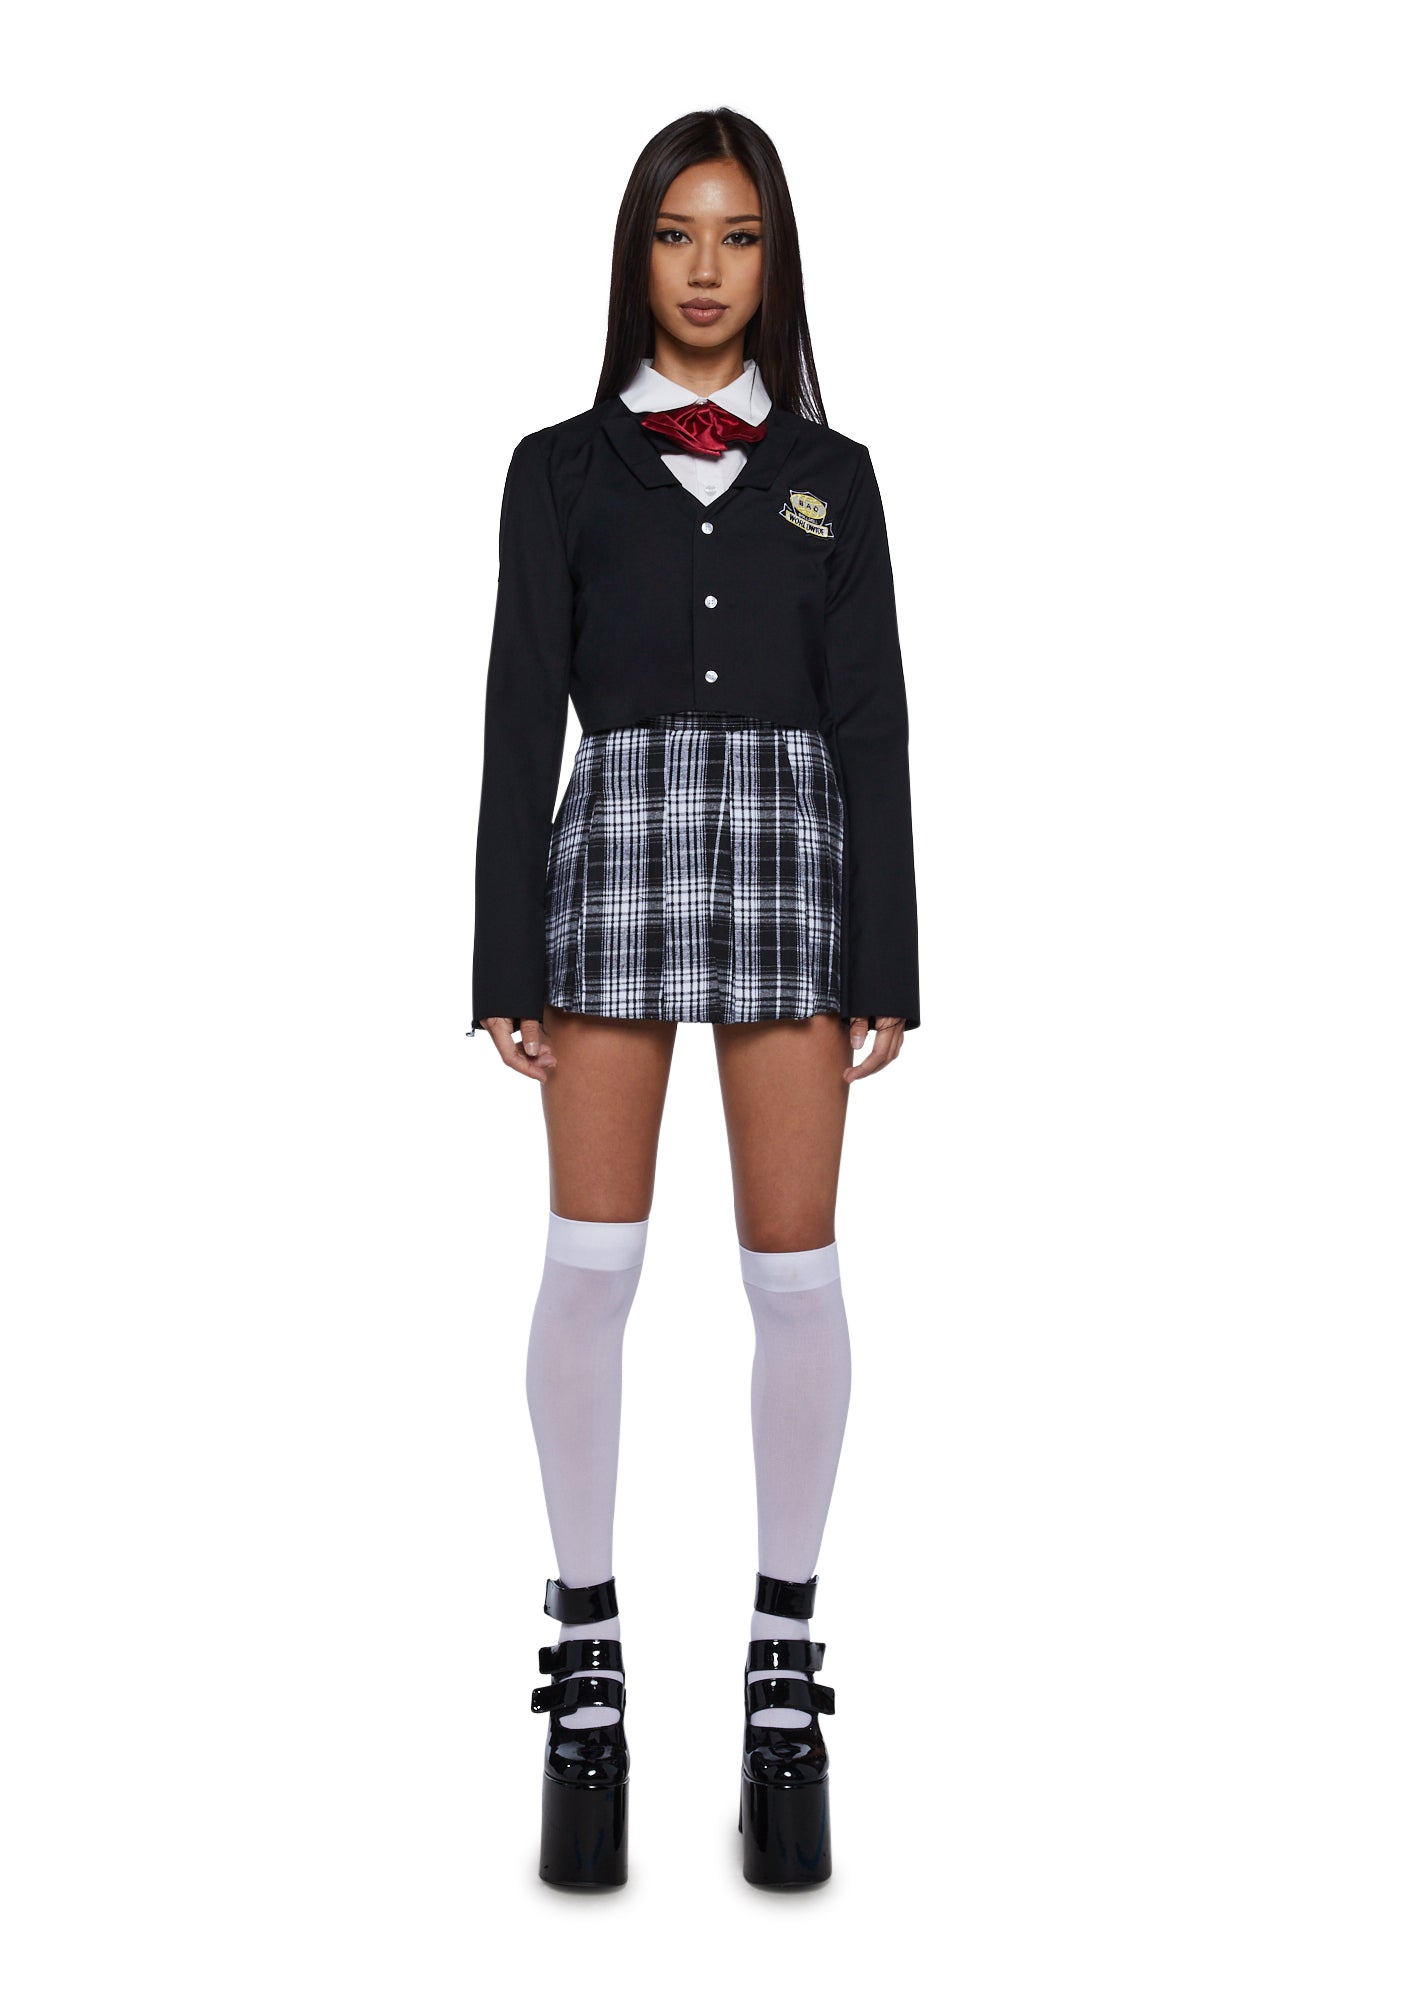 becky garson recommends Catholic School Girl Costume